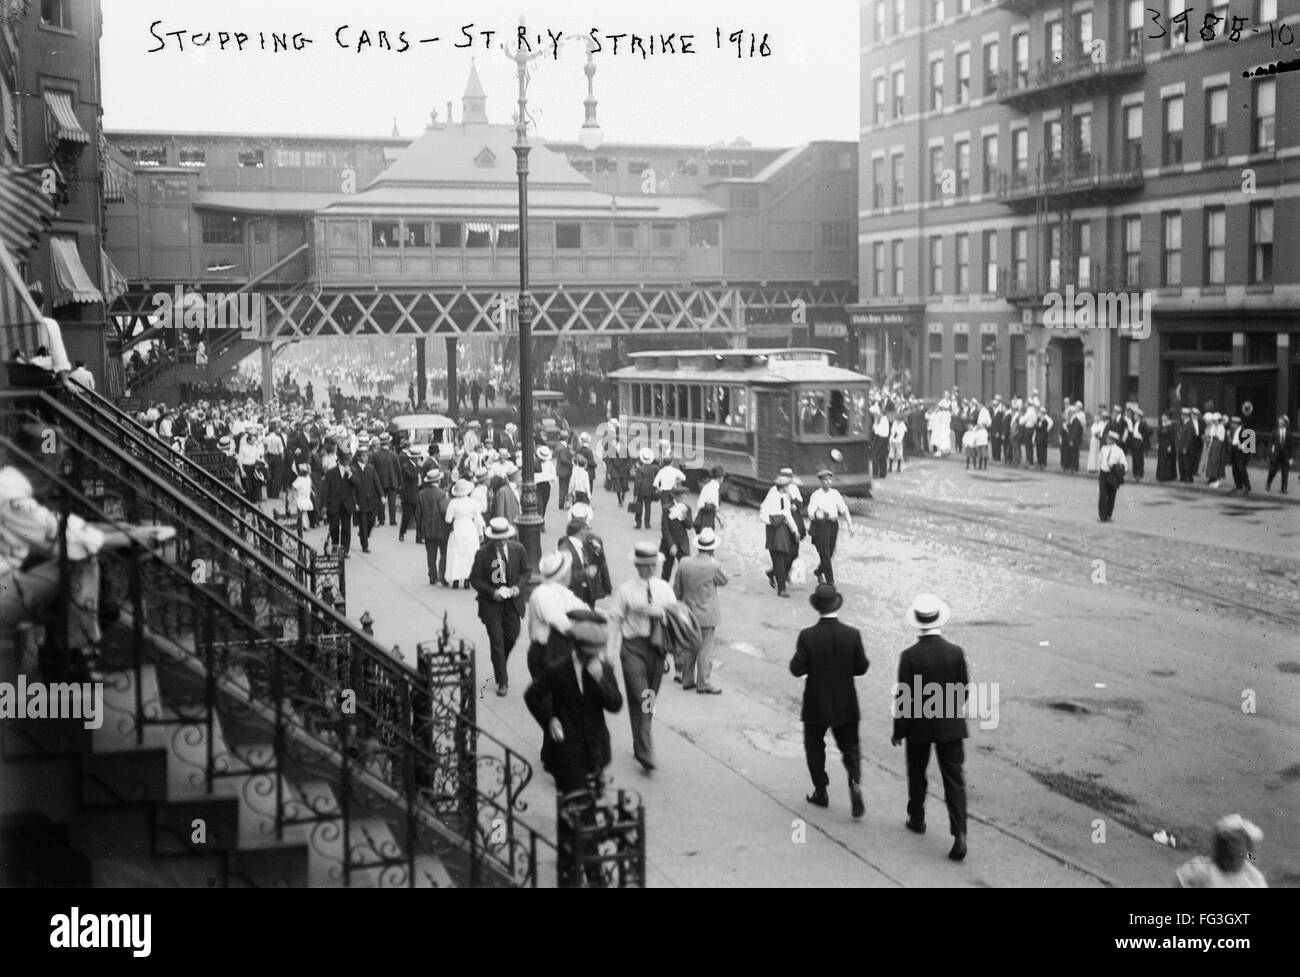 Straßenbahn Streik, 1916. / nStriking Straßenbahn Arbeiter stoppen Straßenbahnen /nin New York City. Fotografie, 1916. Stockfoto